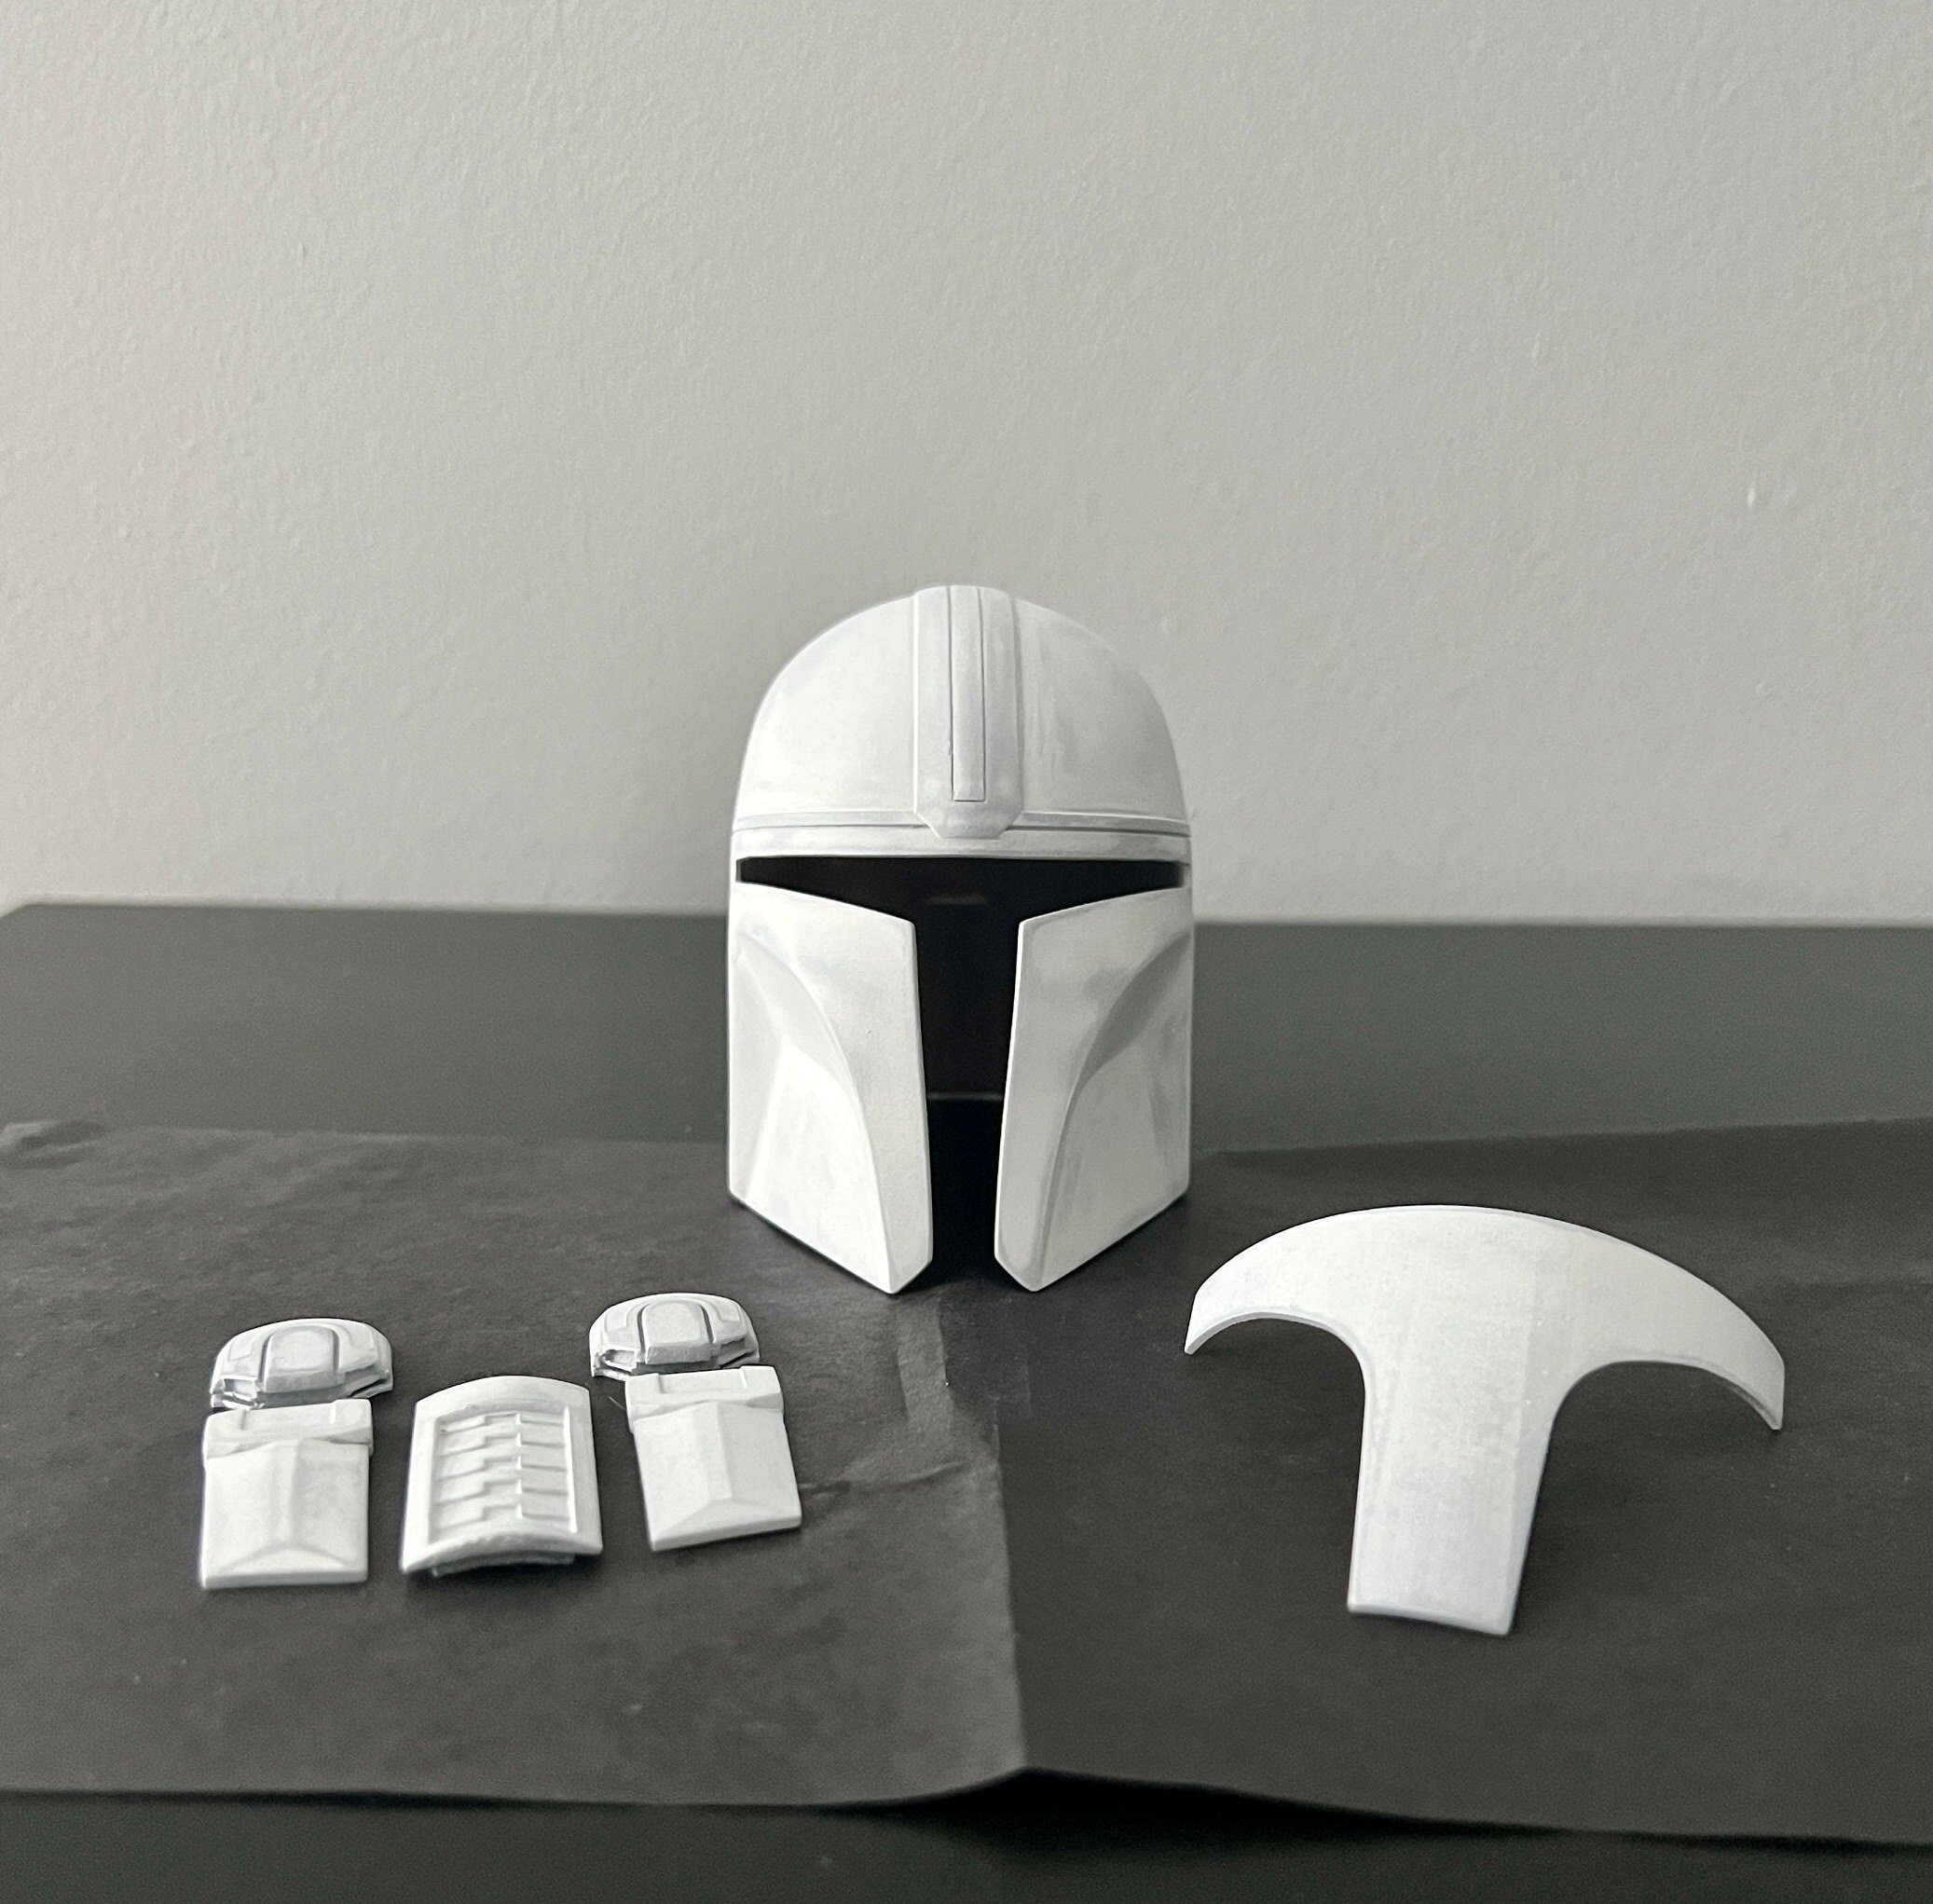 Star Wars Boba Fett Helmet Paint Drip White Throw Pillow